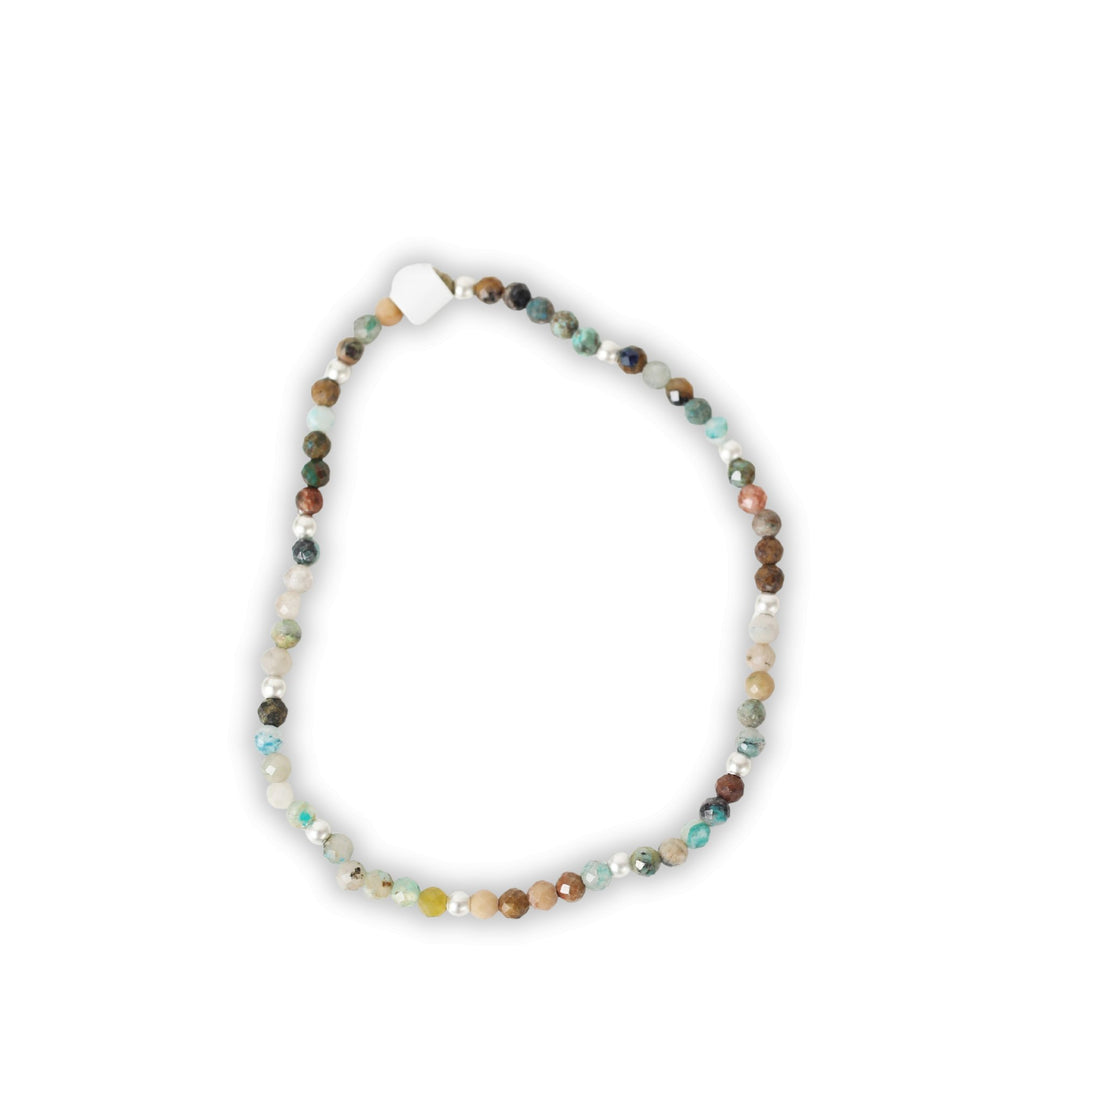 Turquoise Friendship Bracelet - Chocolate and Steel - beaded bracelet - beaded bracelets - blue gemstone - bracelet